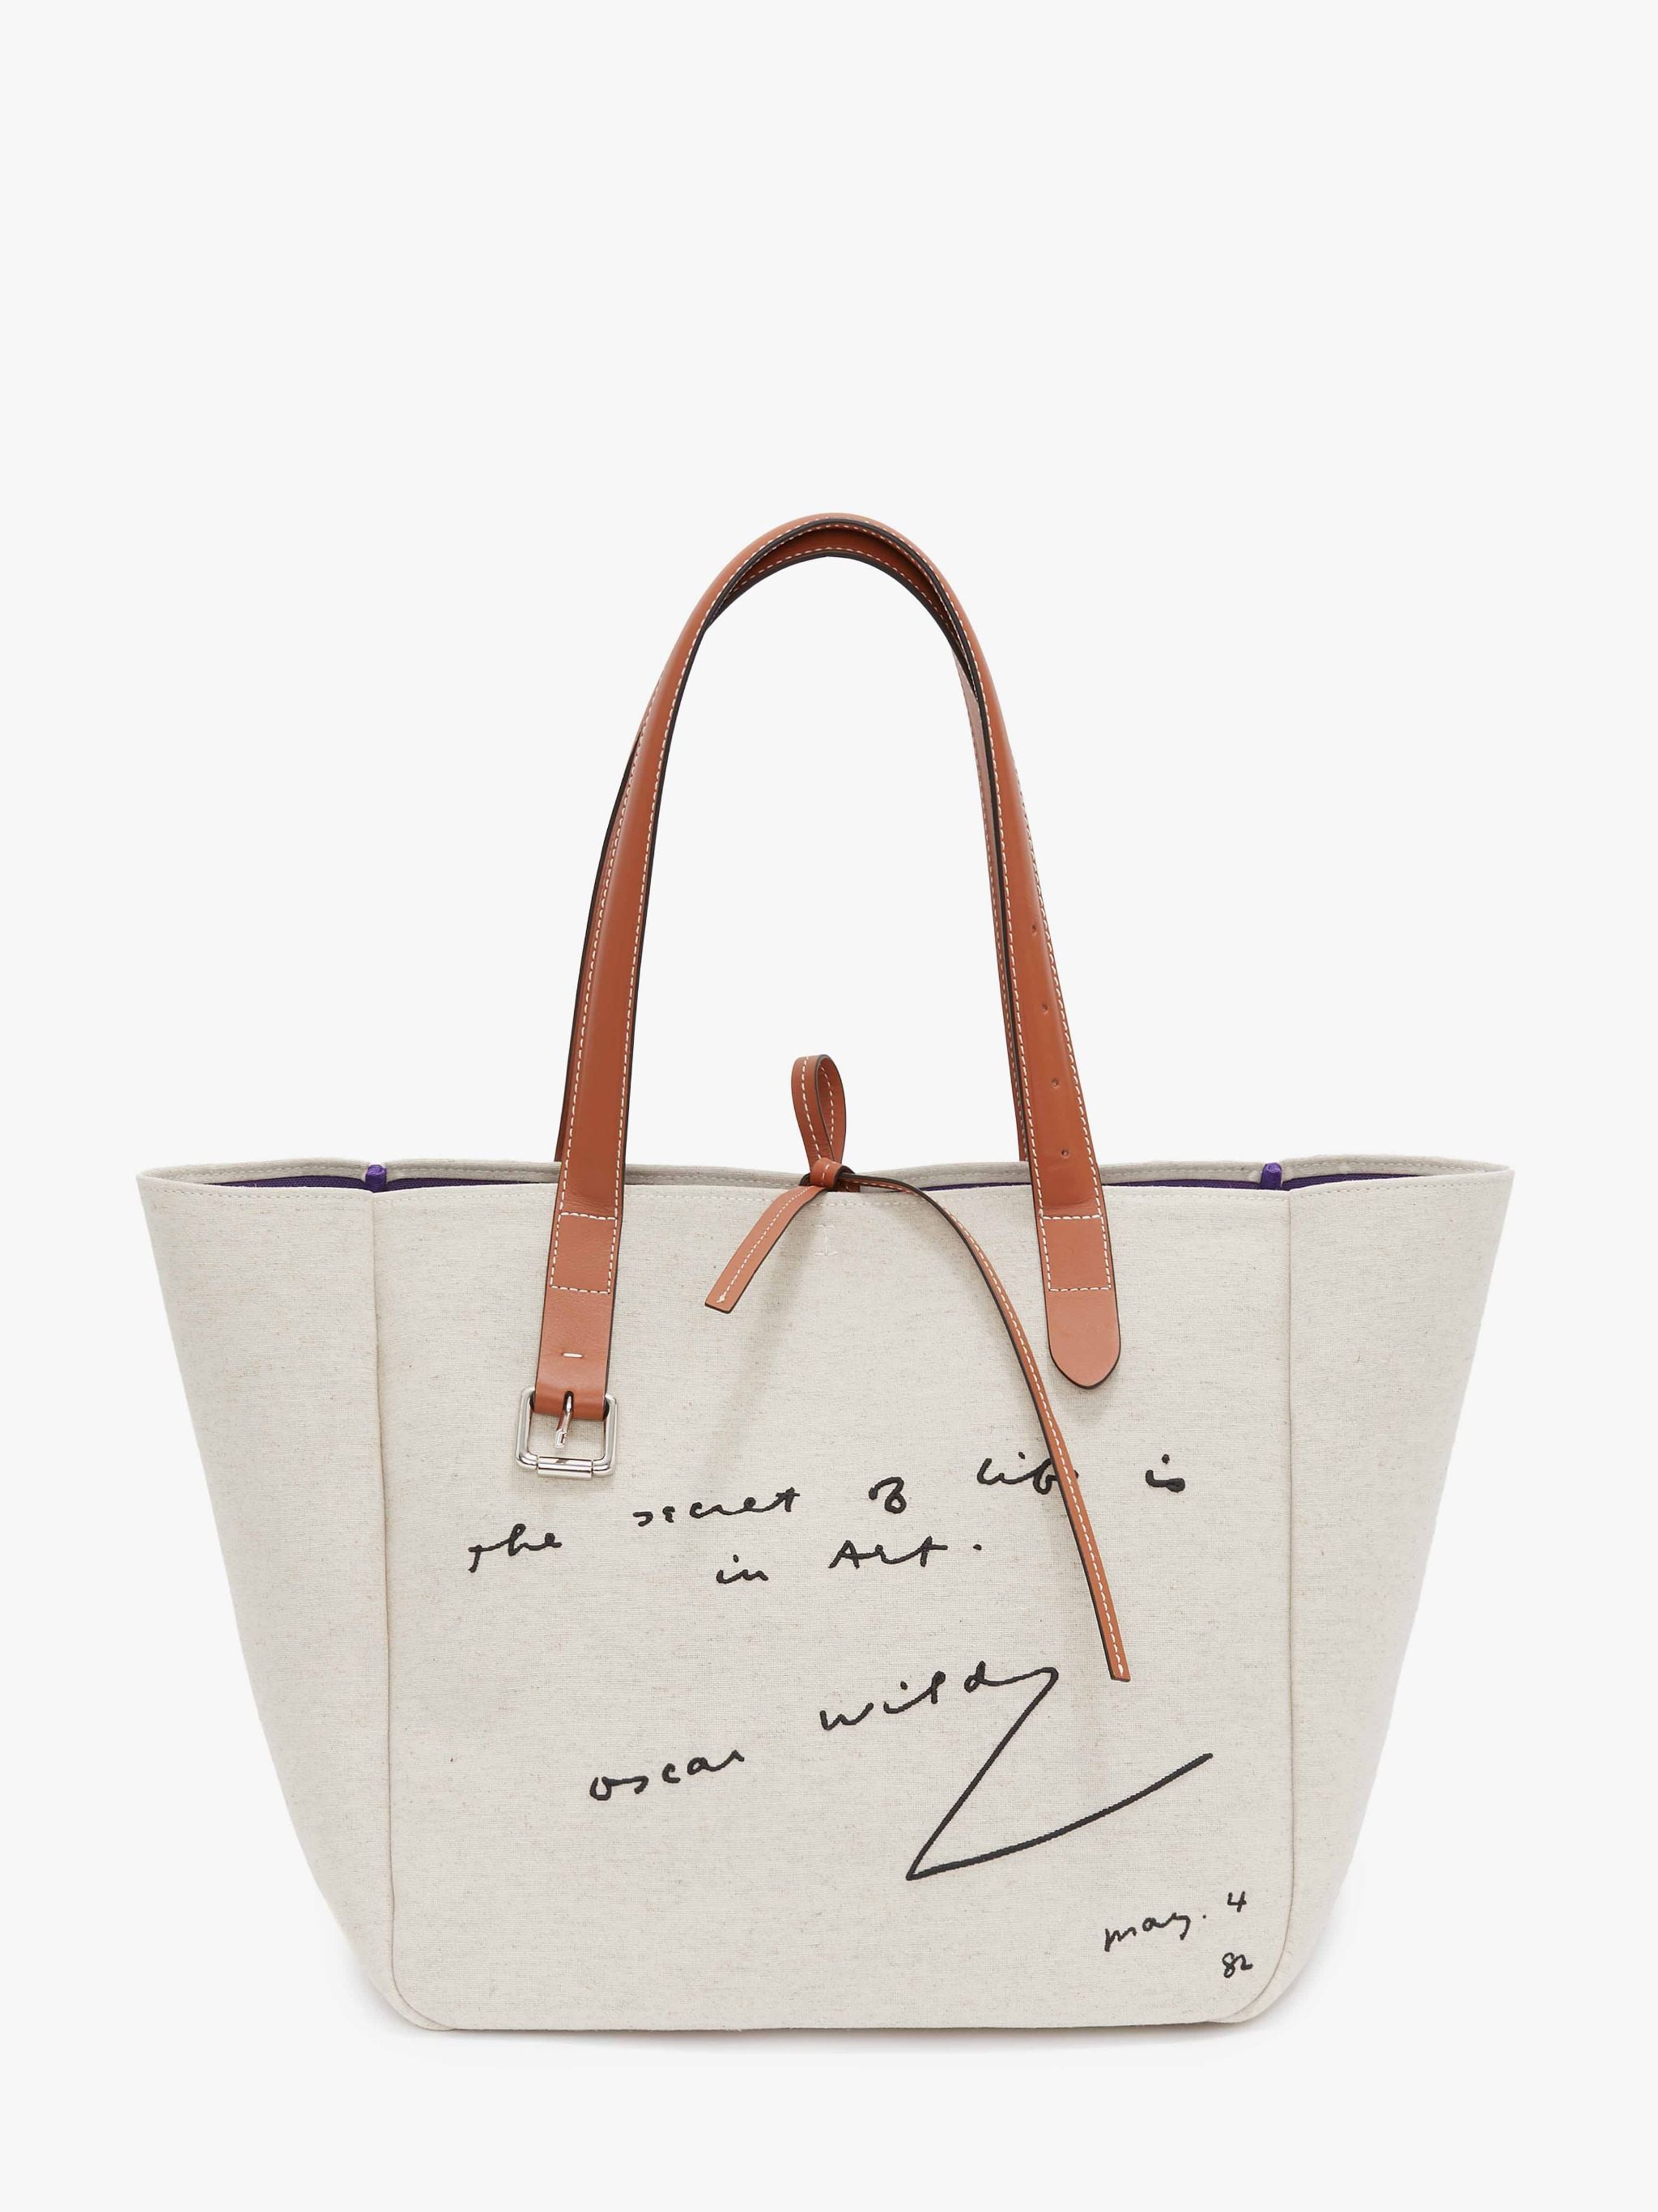 Collectible Designer Handbags